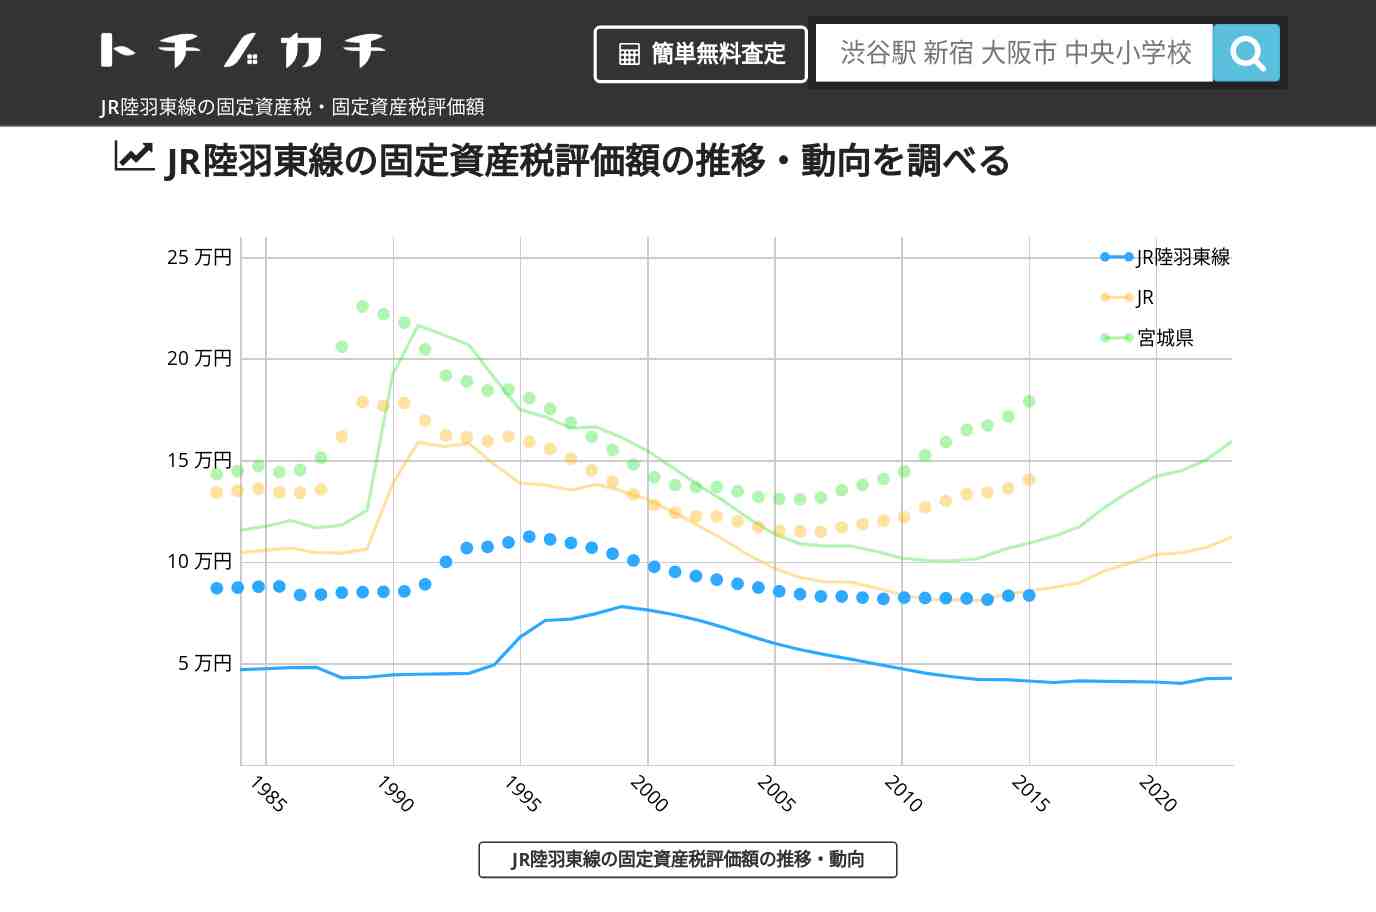 JR陸羽東線(JR)の固定資産税・固定資産税評価額 | トチノカチ